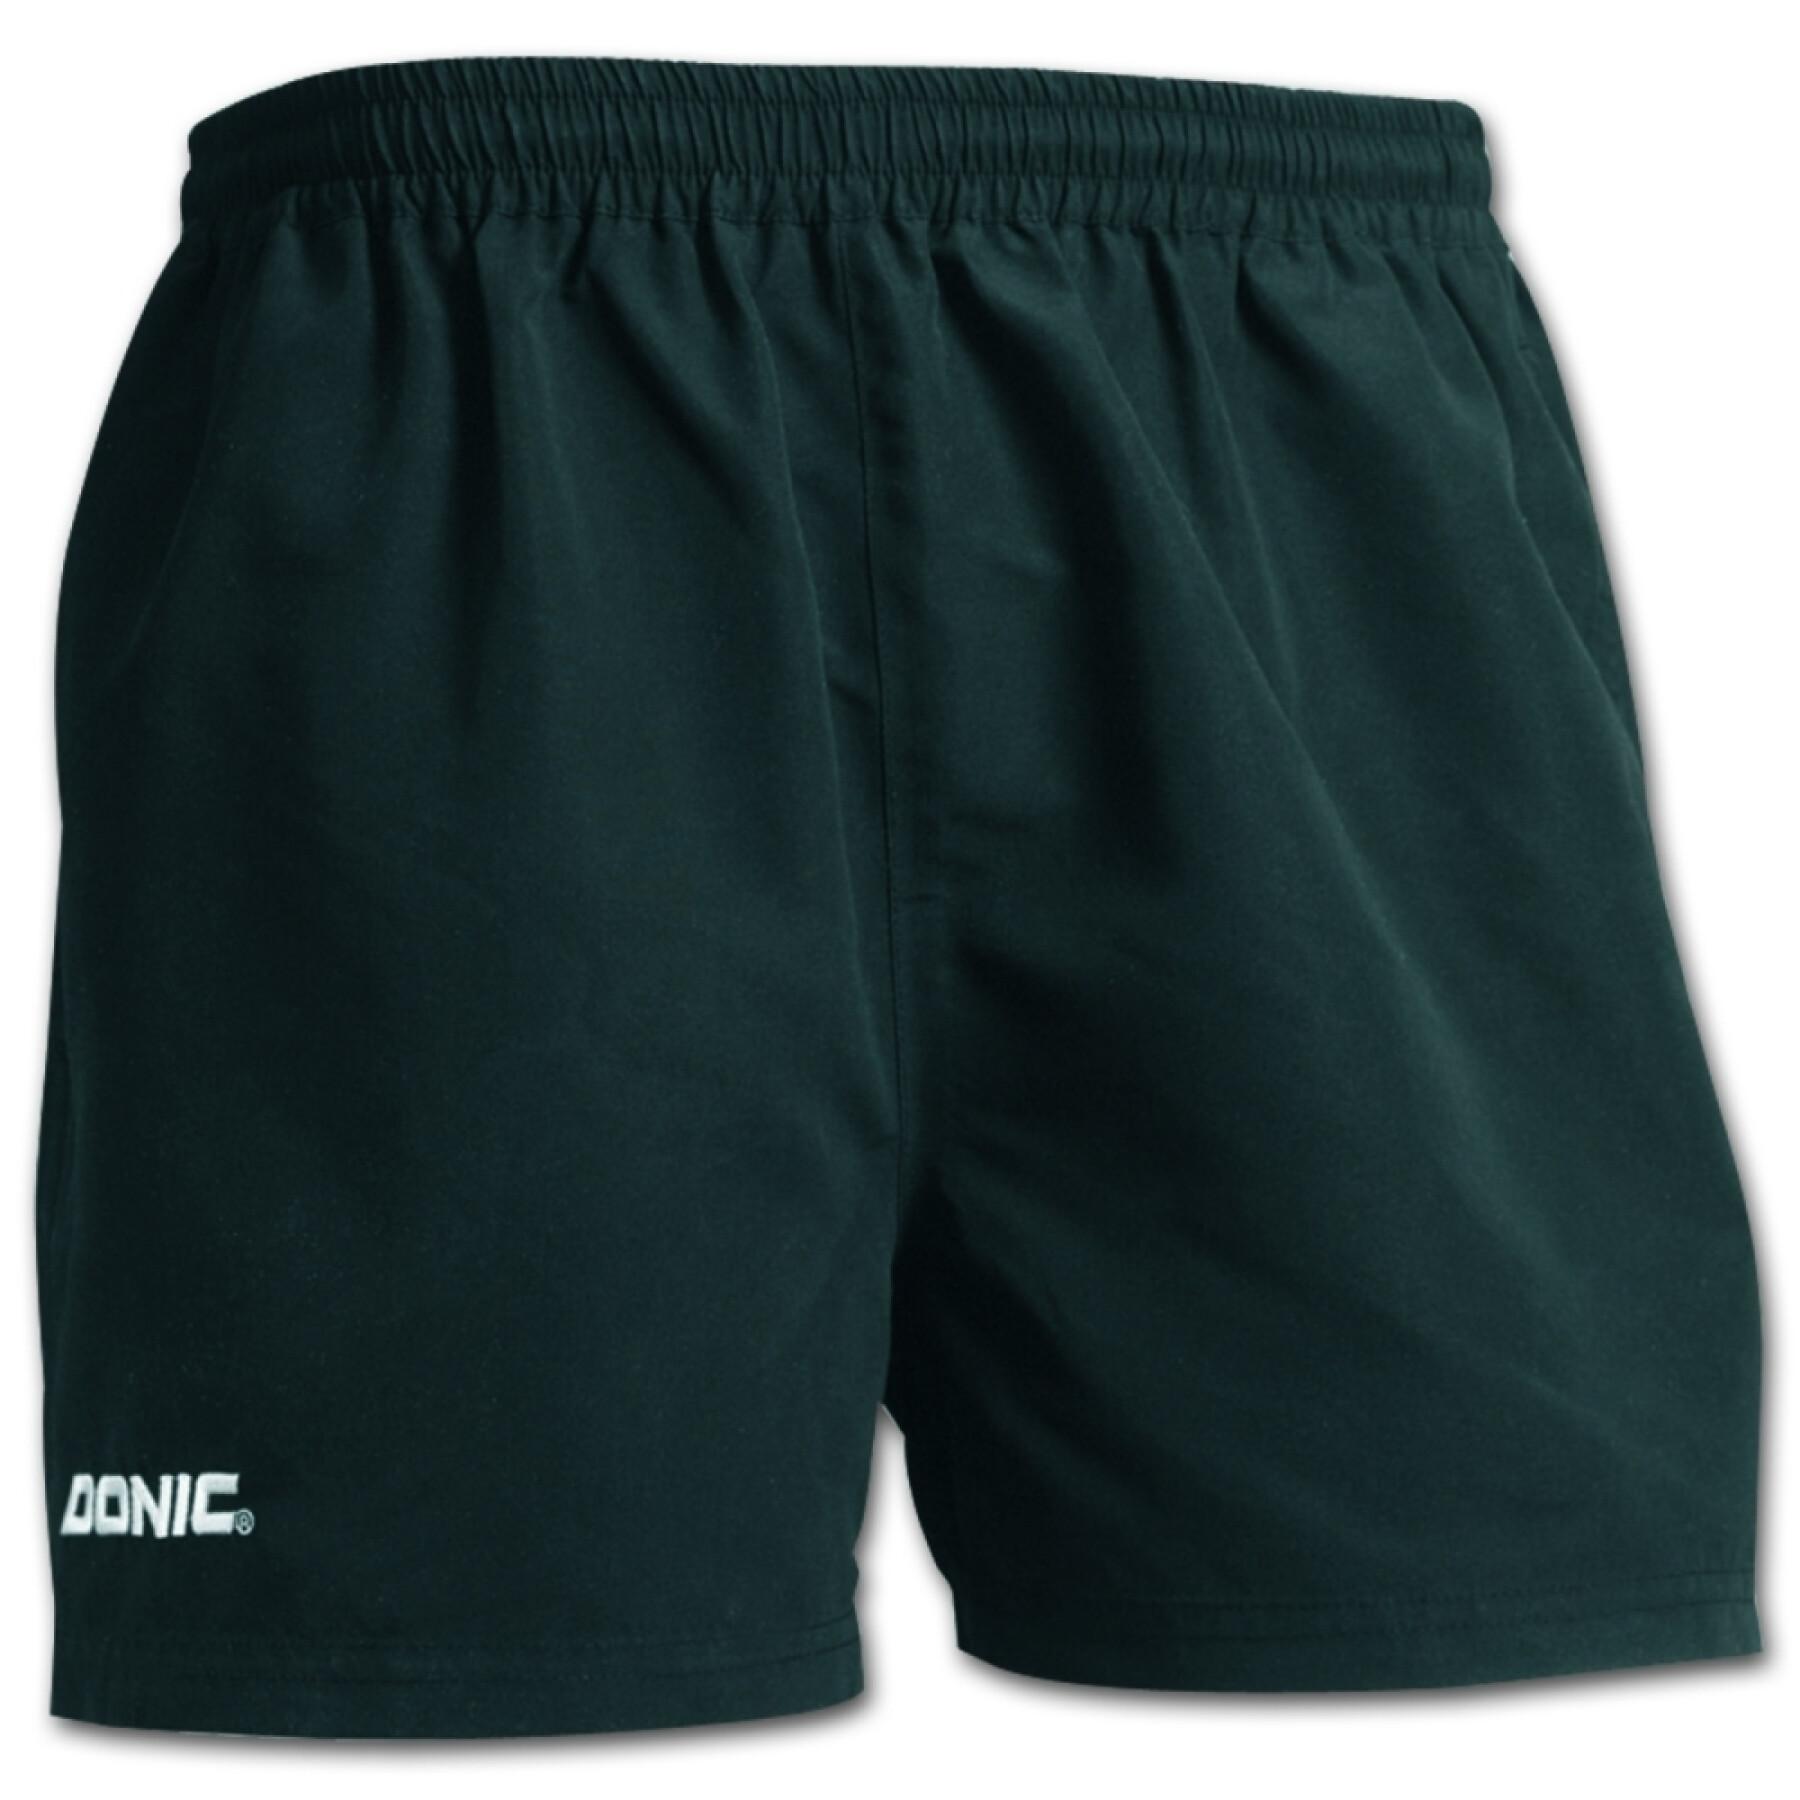 Pantalón corto Donic Basic